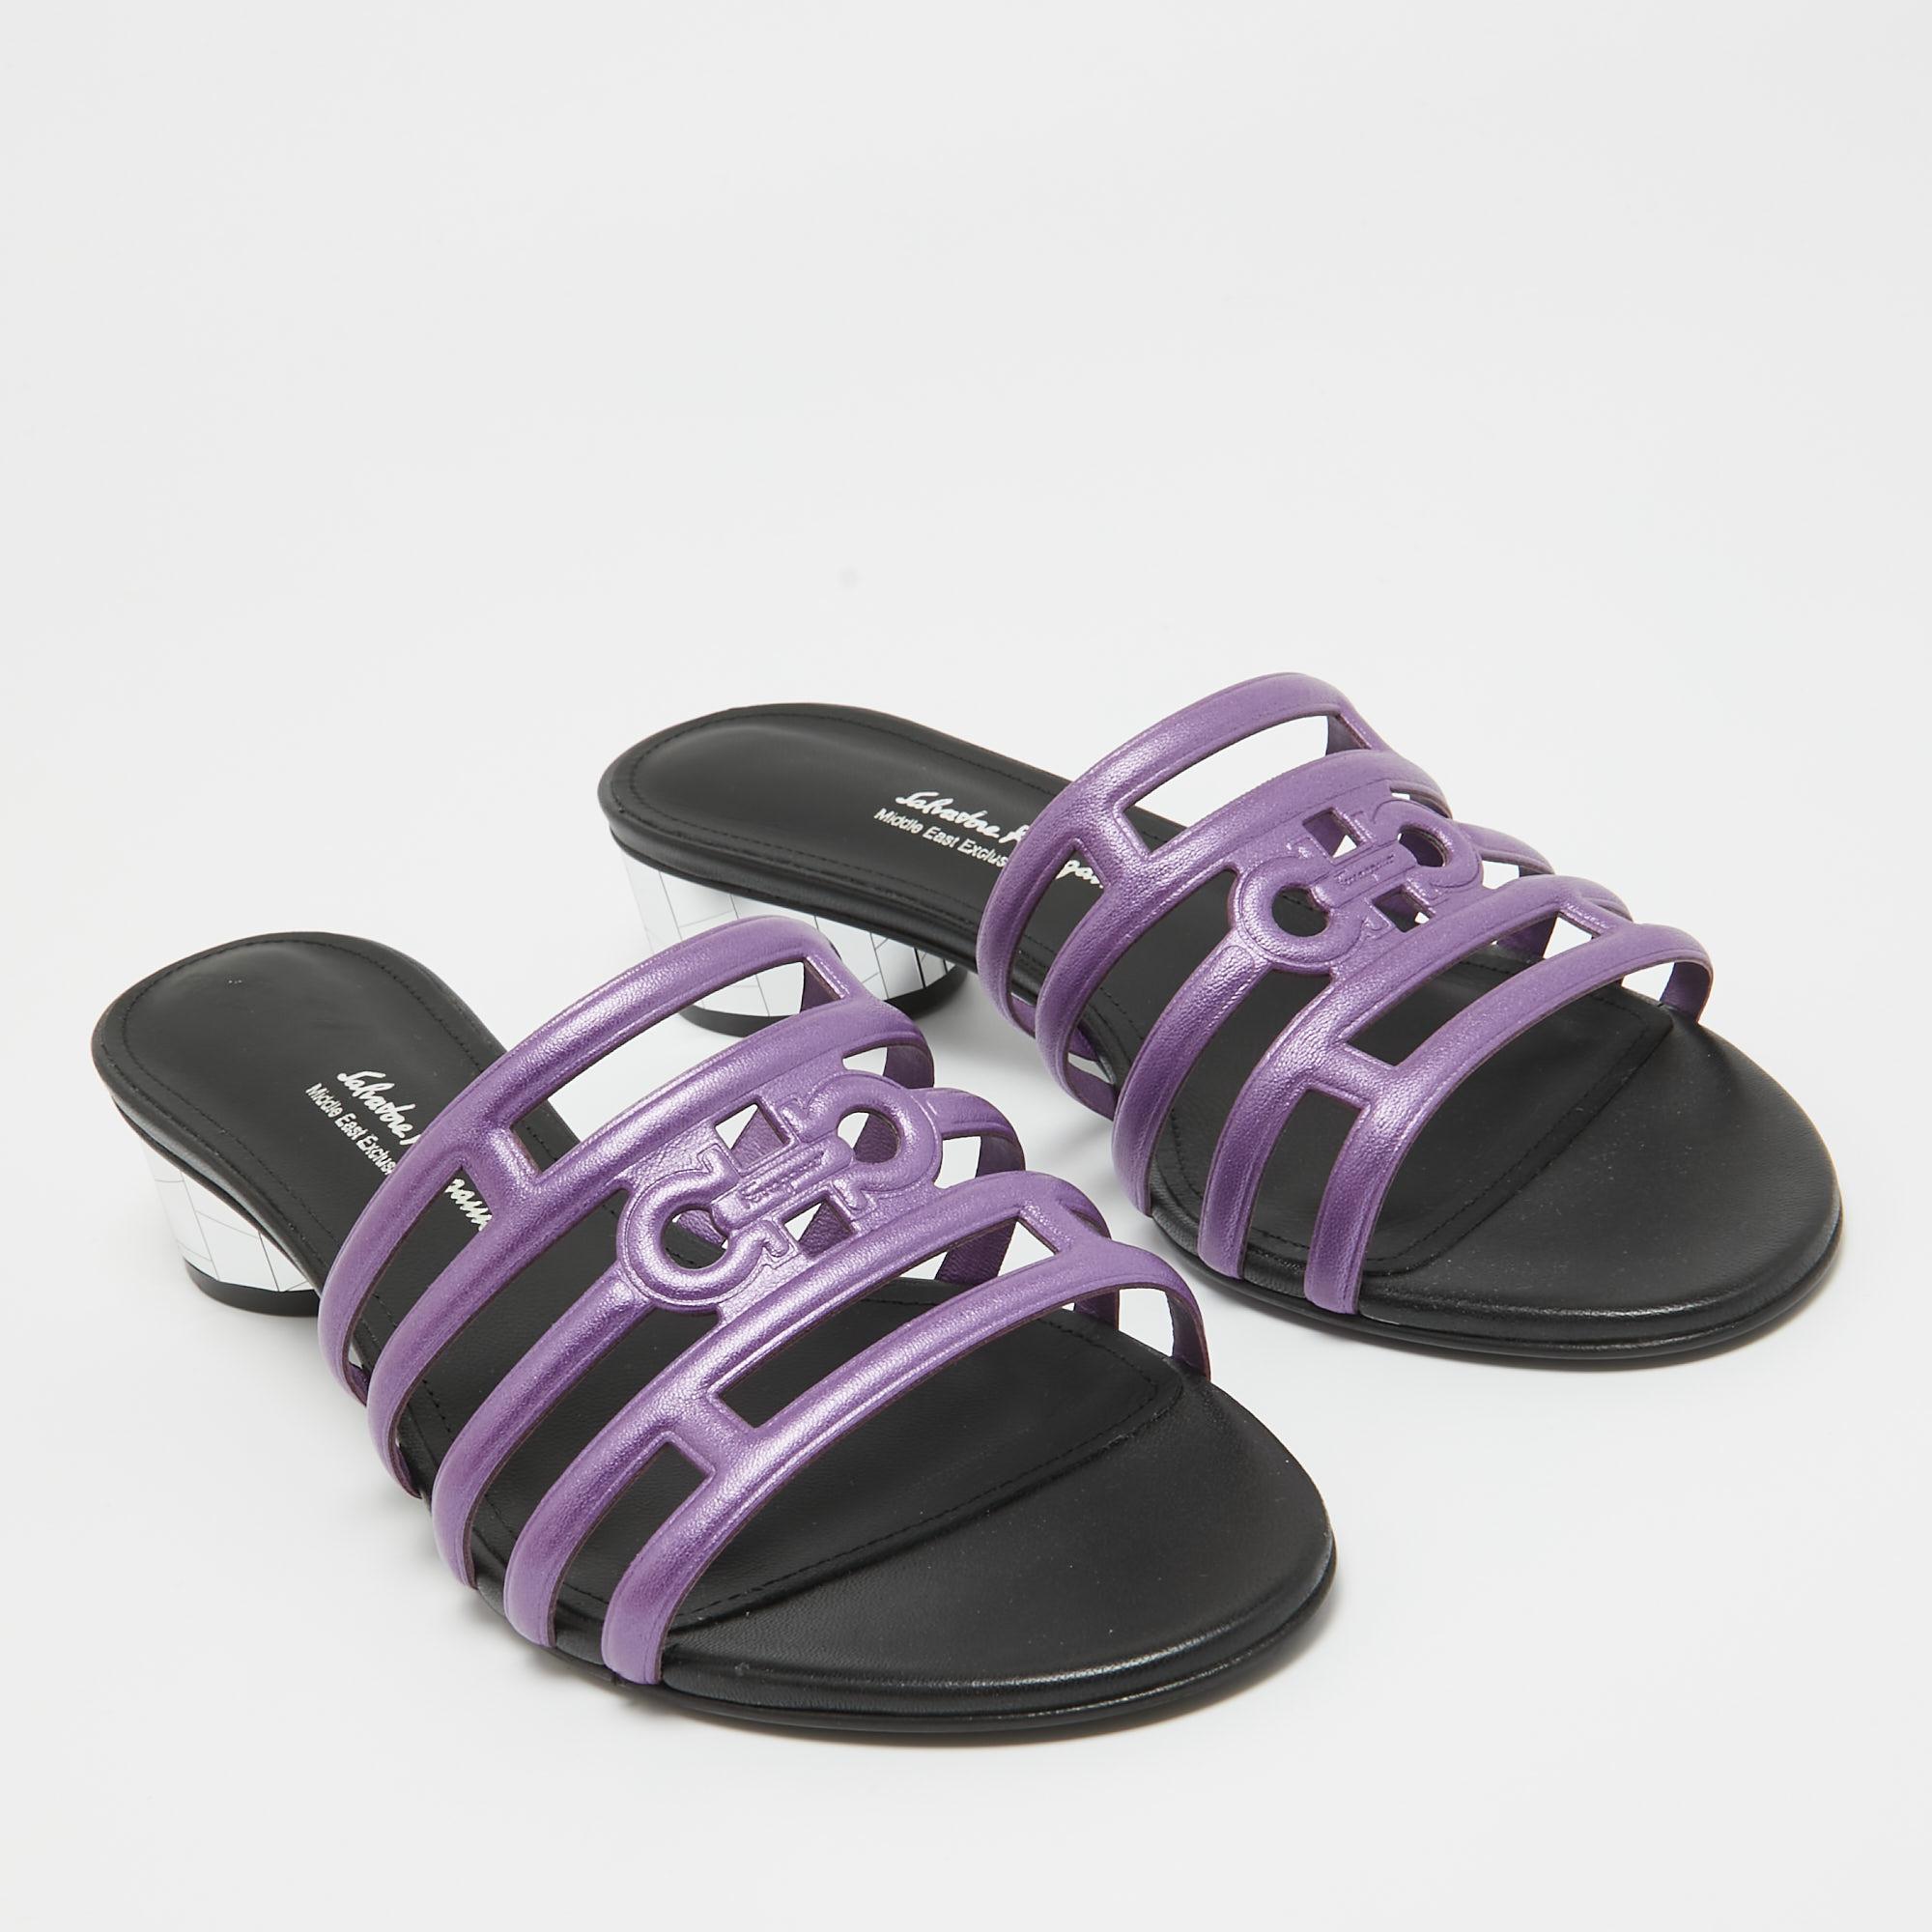 Salvatore Ferragamo Purple/Black Leather Finn Slide Sandals Size 38.5 For Sale 2